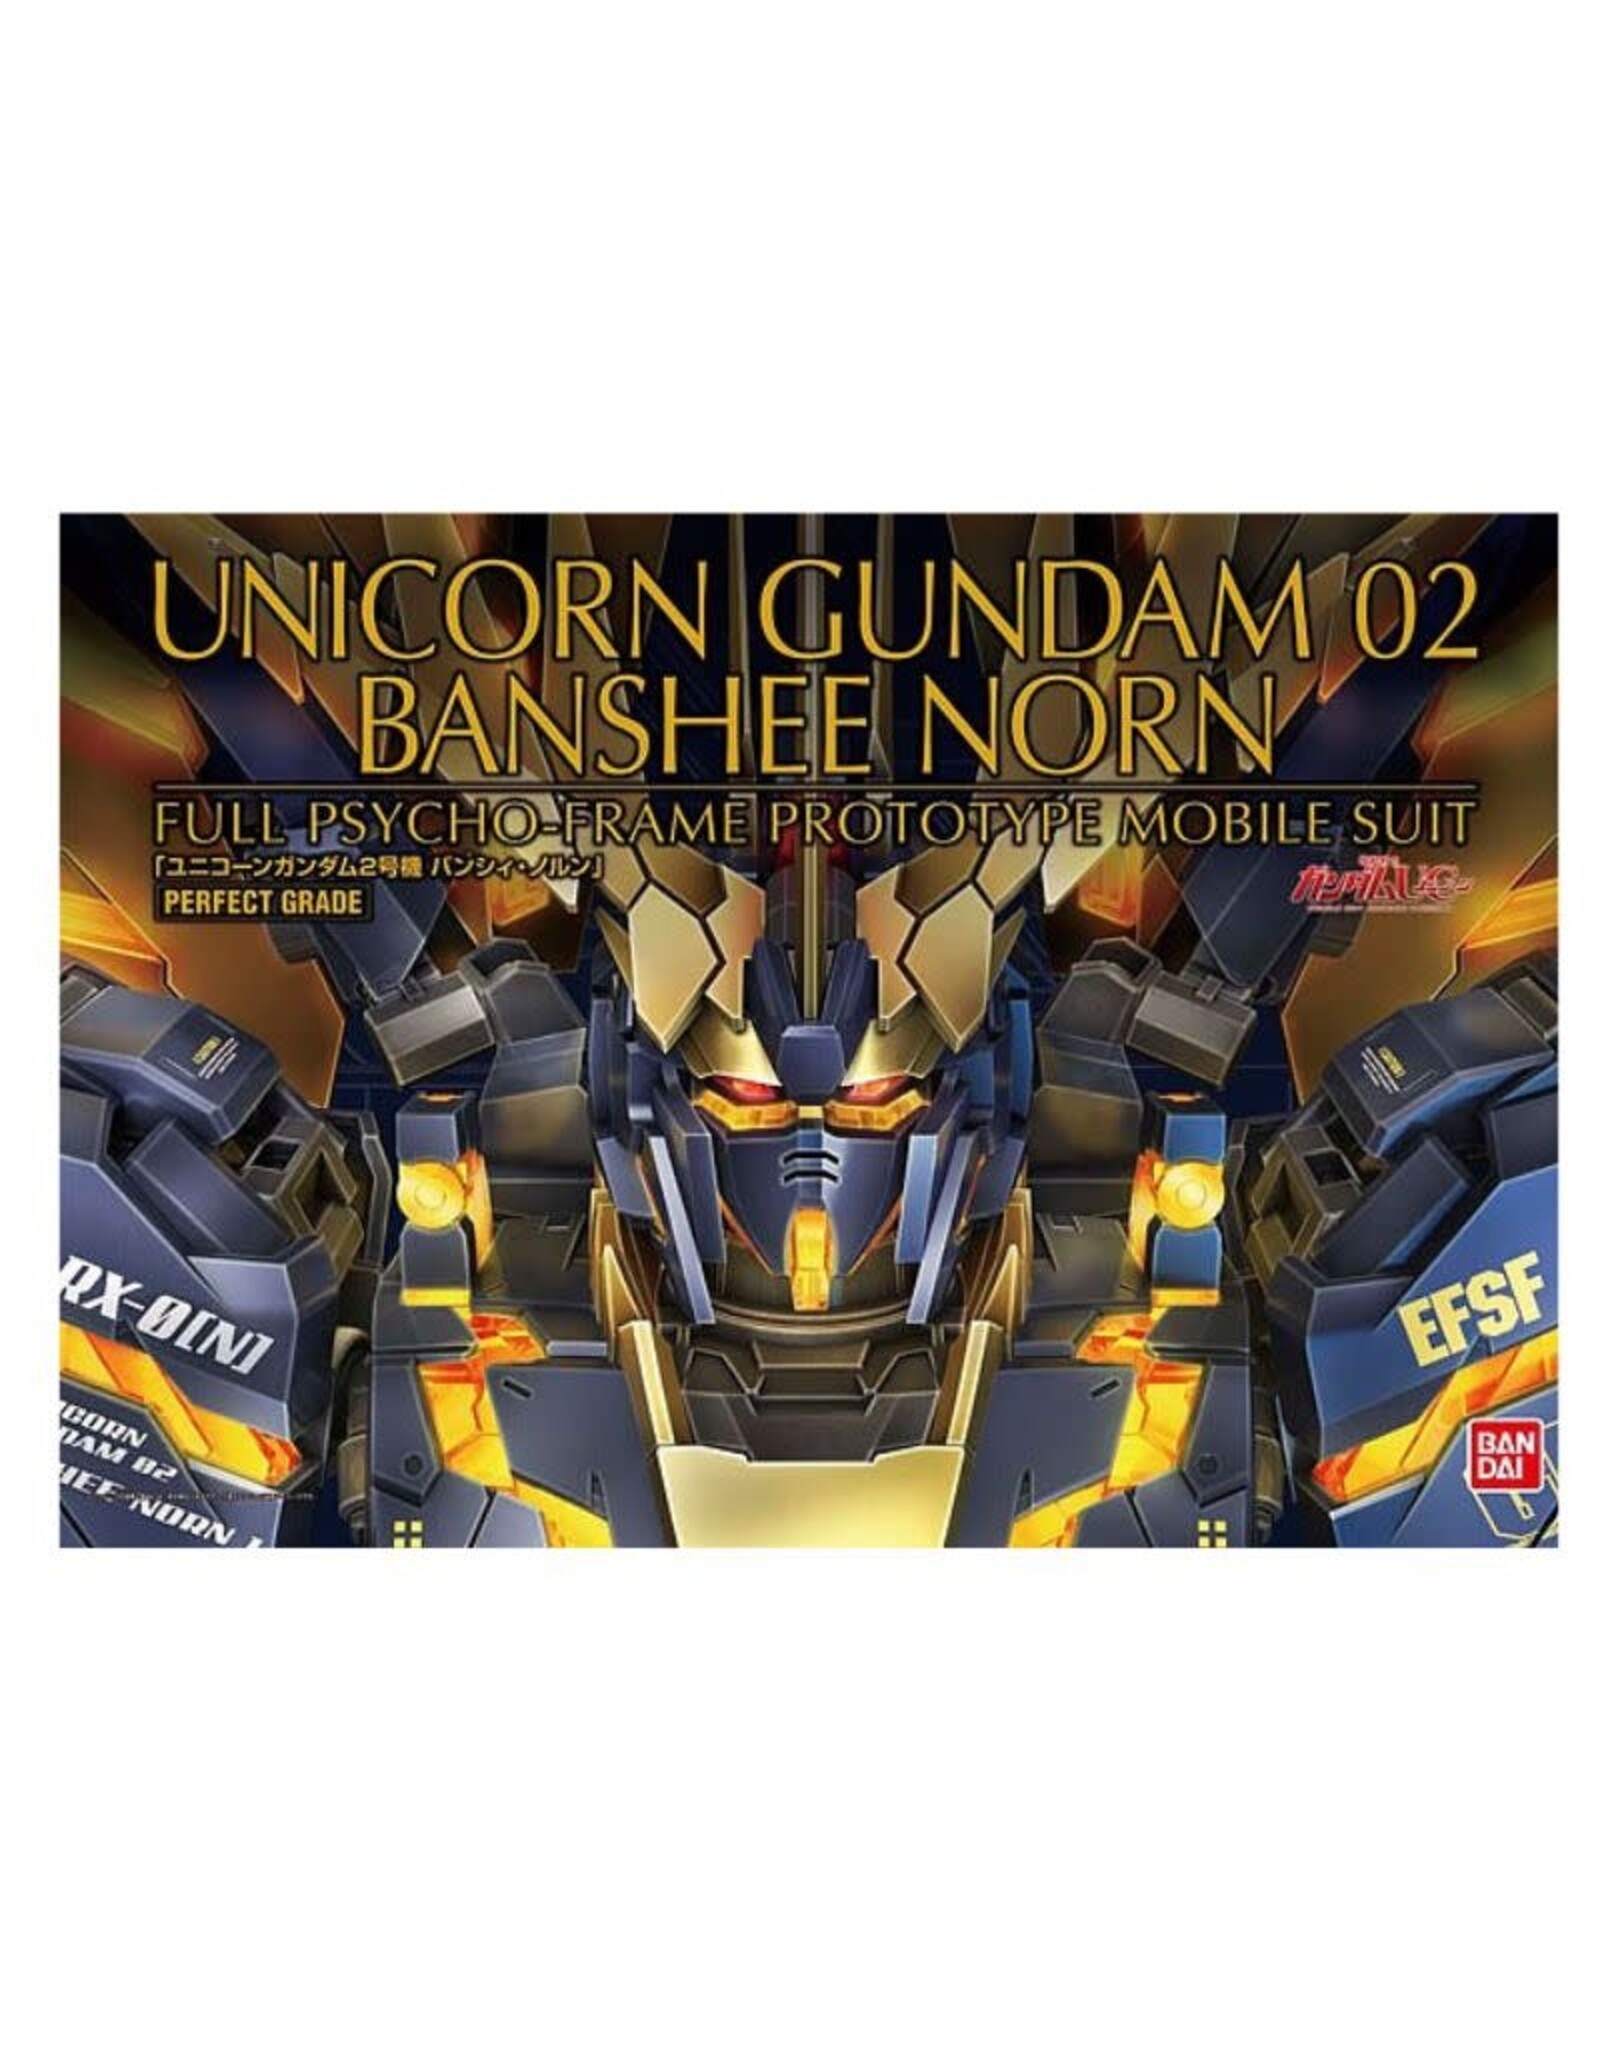 Unicorn Gundam 02 Banshee PG